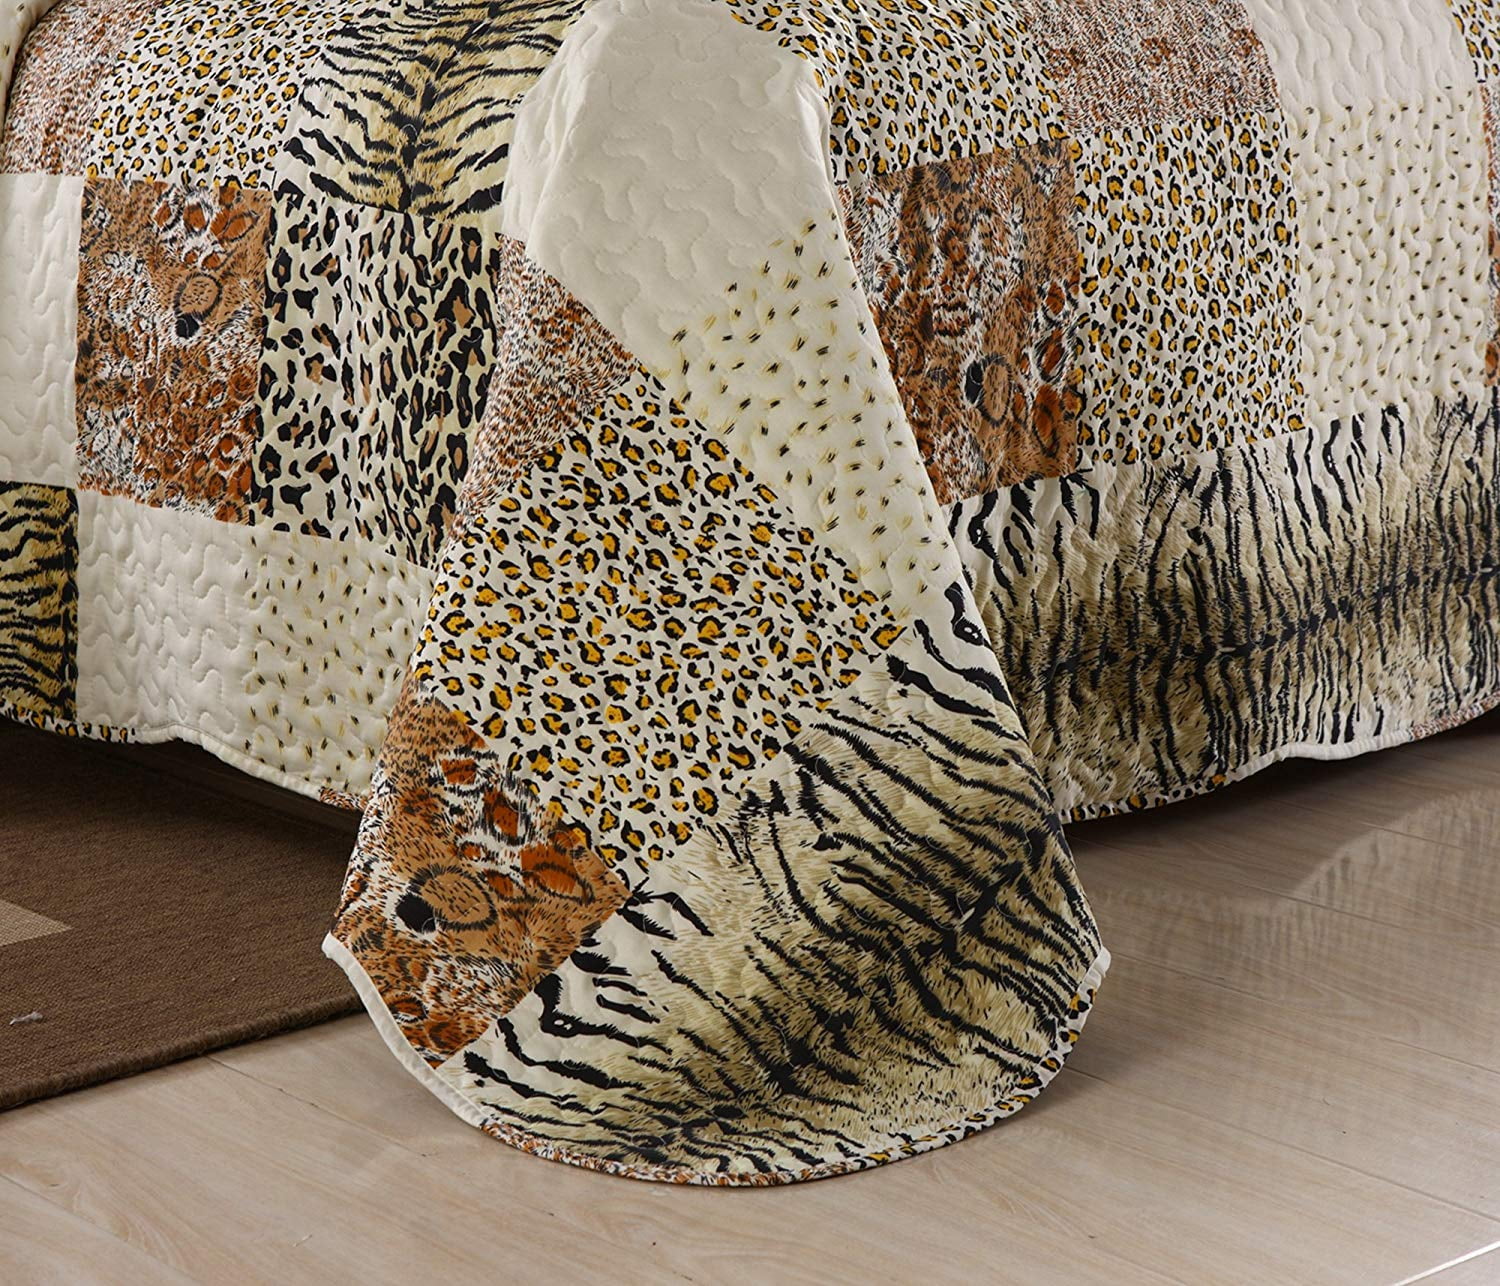 Blanket Quilt Print Ensemble Bedspread Print Animal Leopard Cheetah 3 (Queen) Piece Quilt Bedding Bedspread Set Throw MarCielo Quilted Coverlet